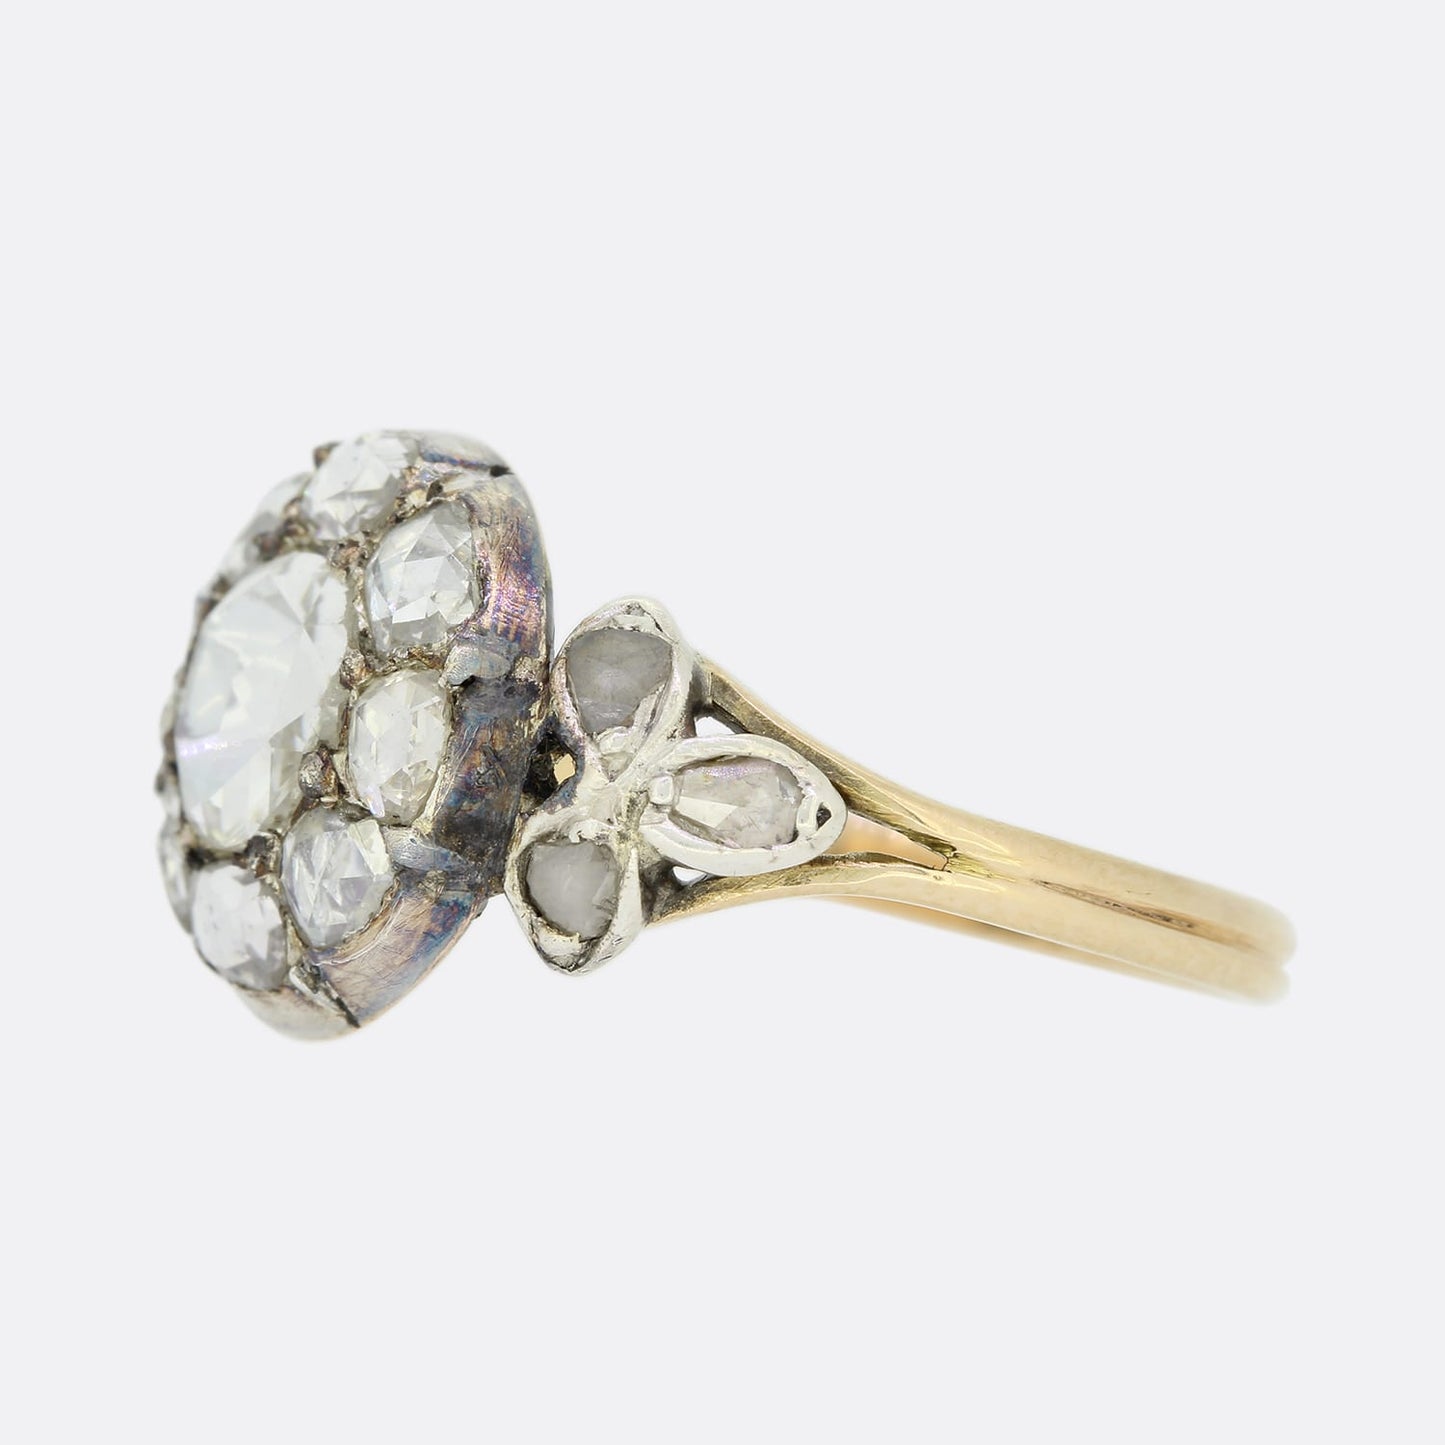 Circa 1770s Georgian Rose Cut Diamond Cluster Ring